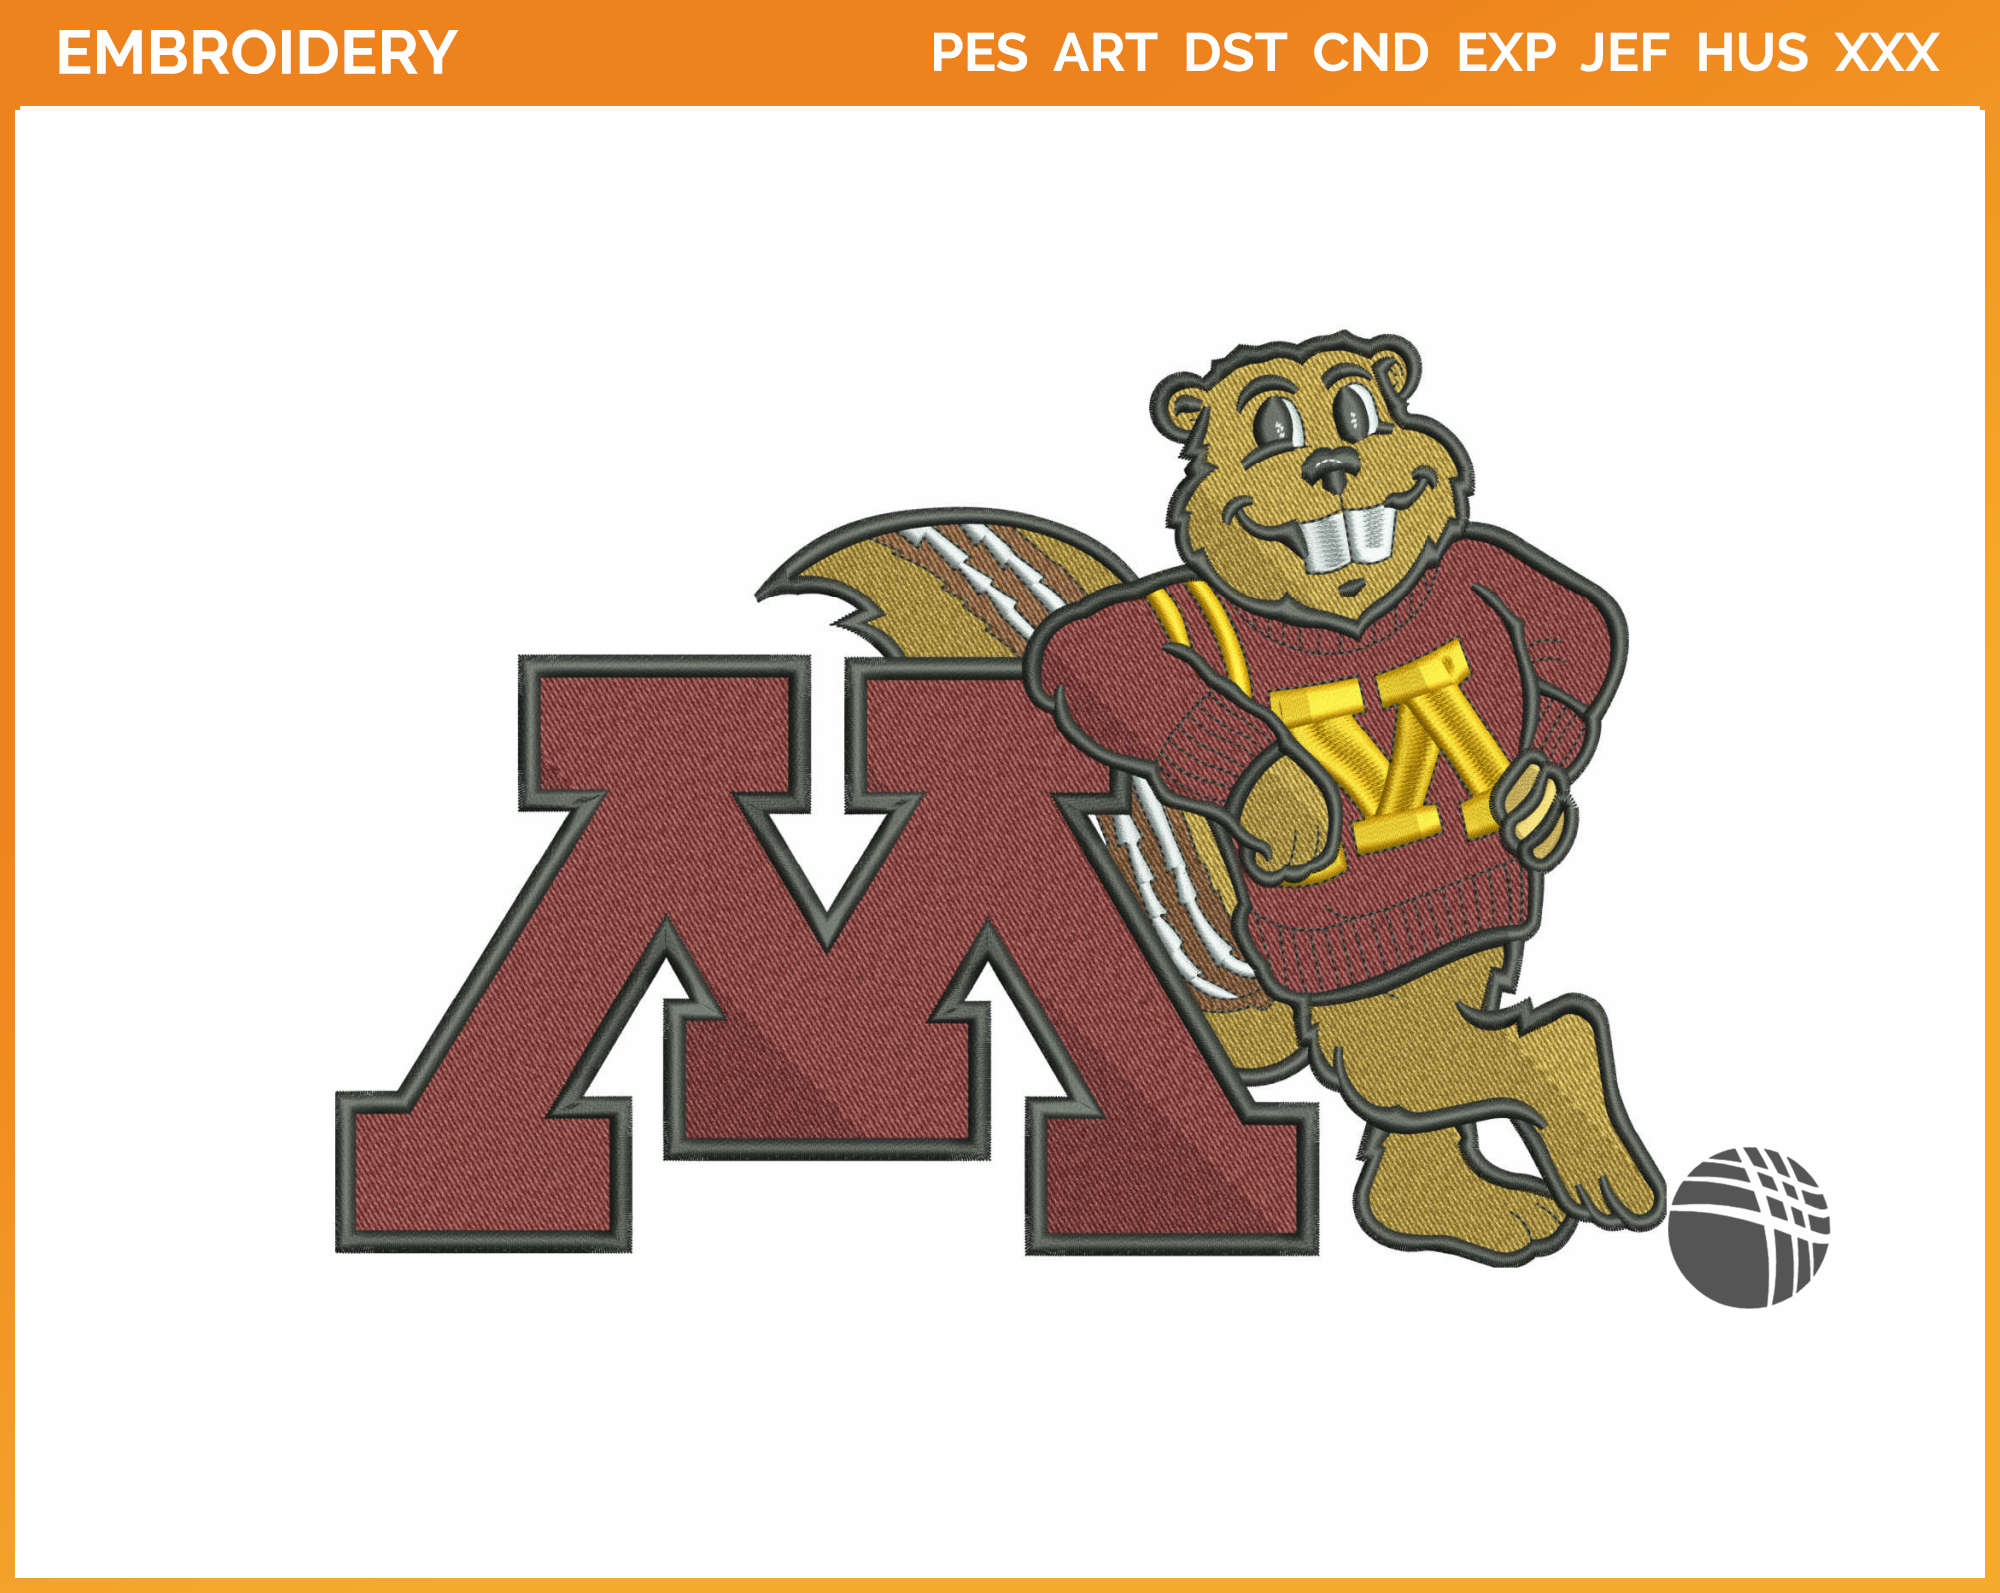 Minnesota Golden Gophers - Mascot Logo (1986) - College Sports